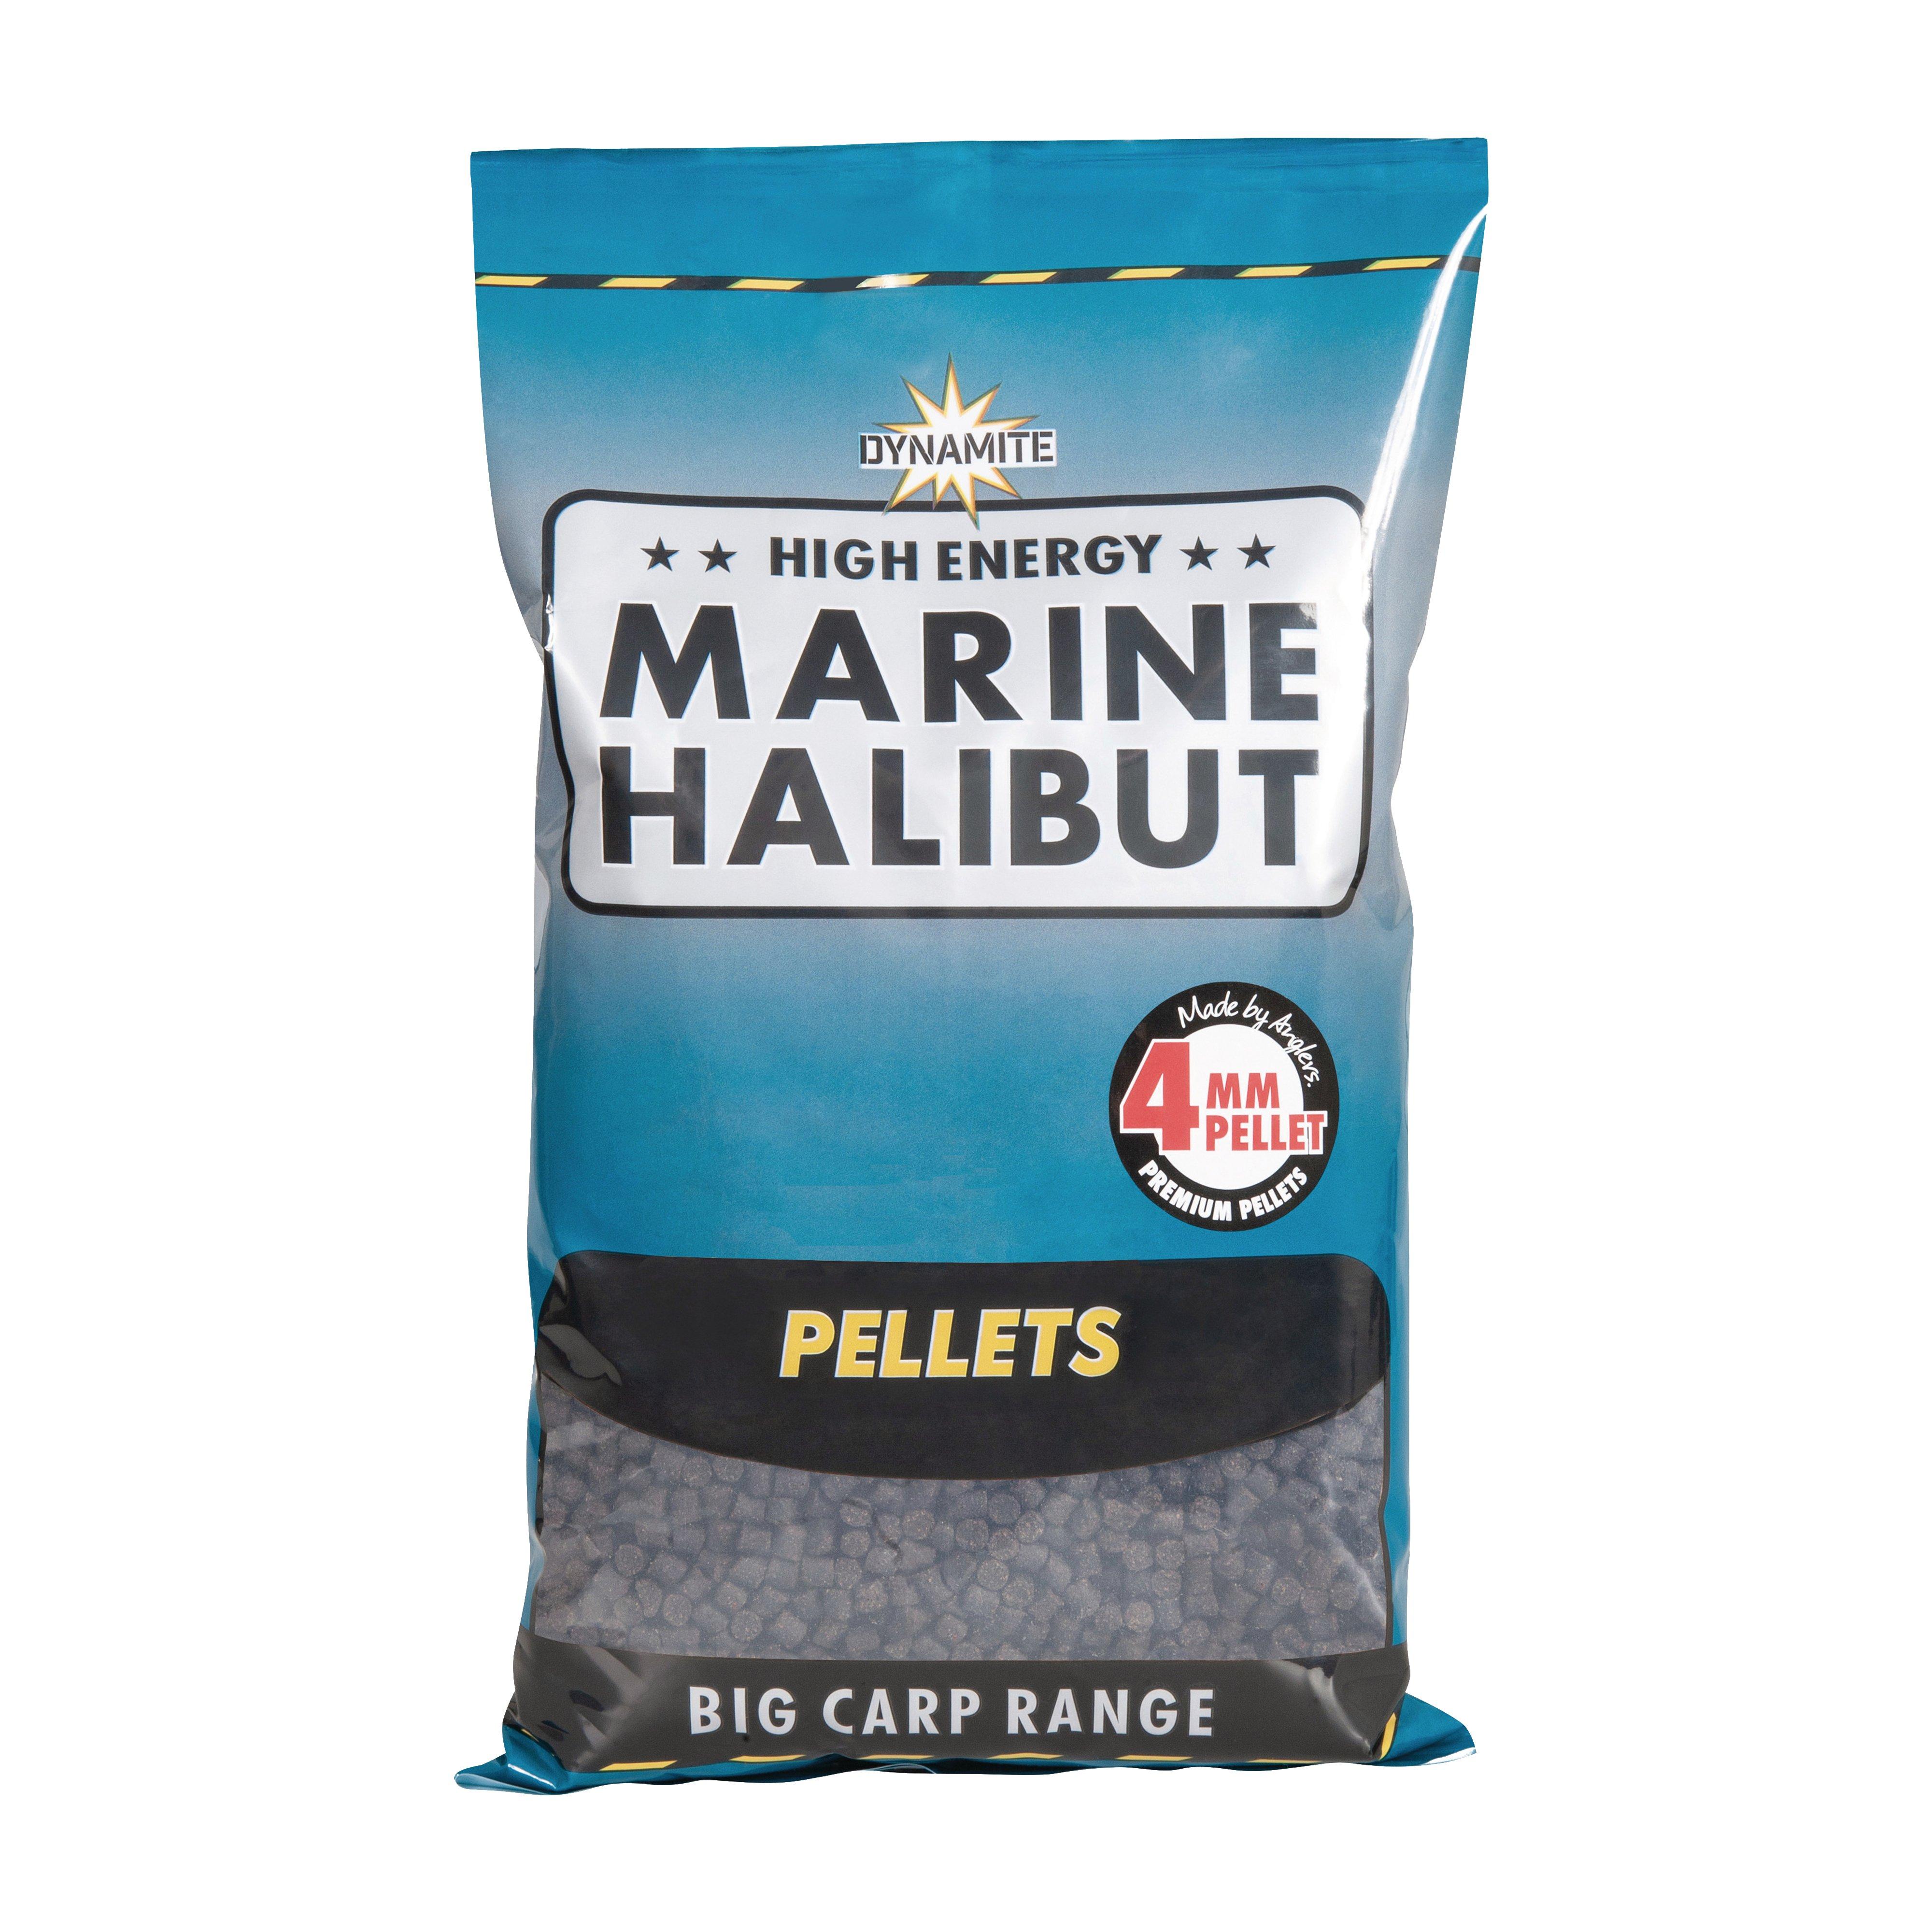 Dynamite Marine Halibut Pellets 4mm 1kg Fishing Match Bait Review